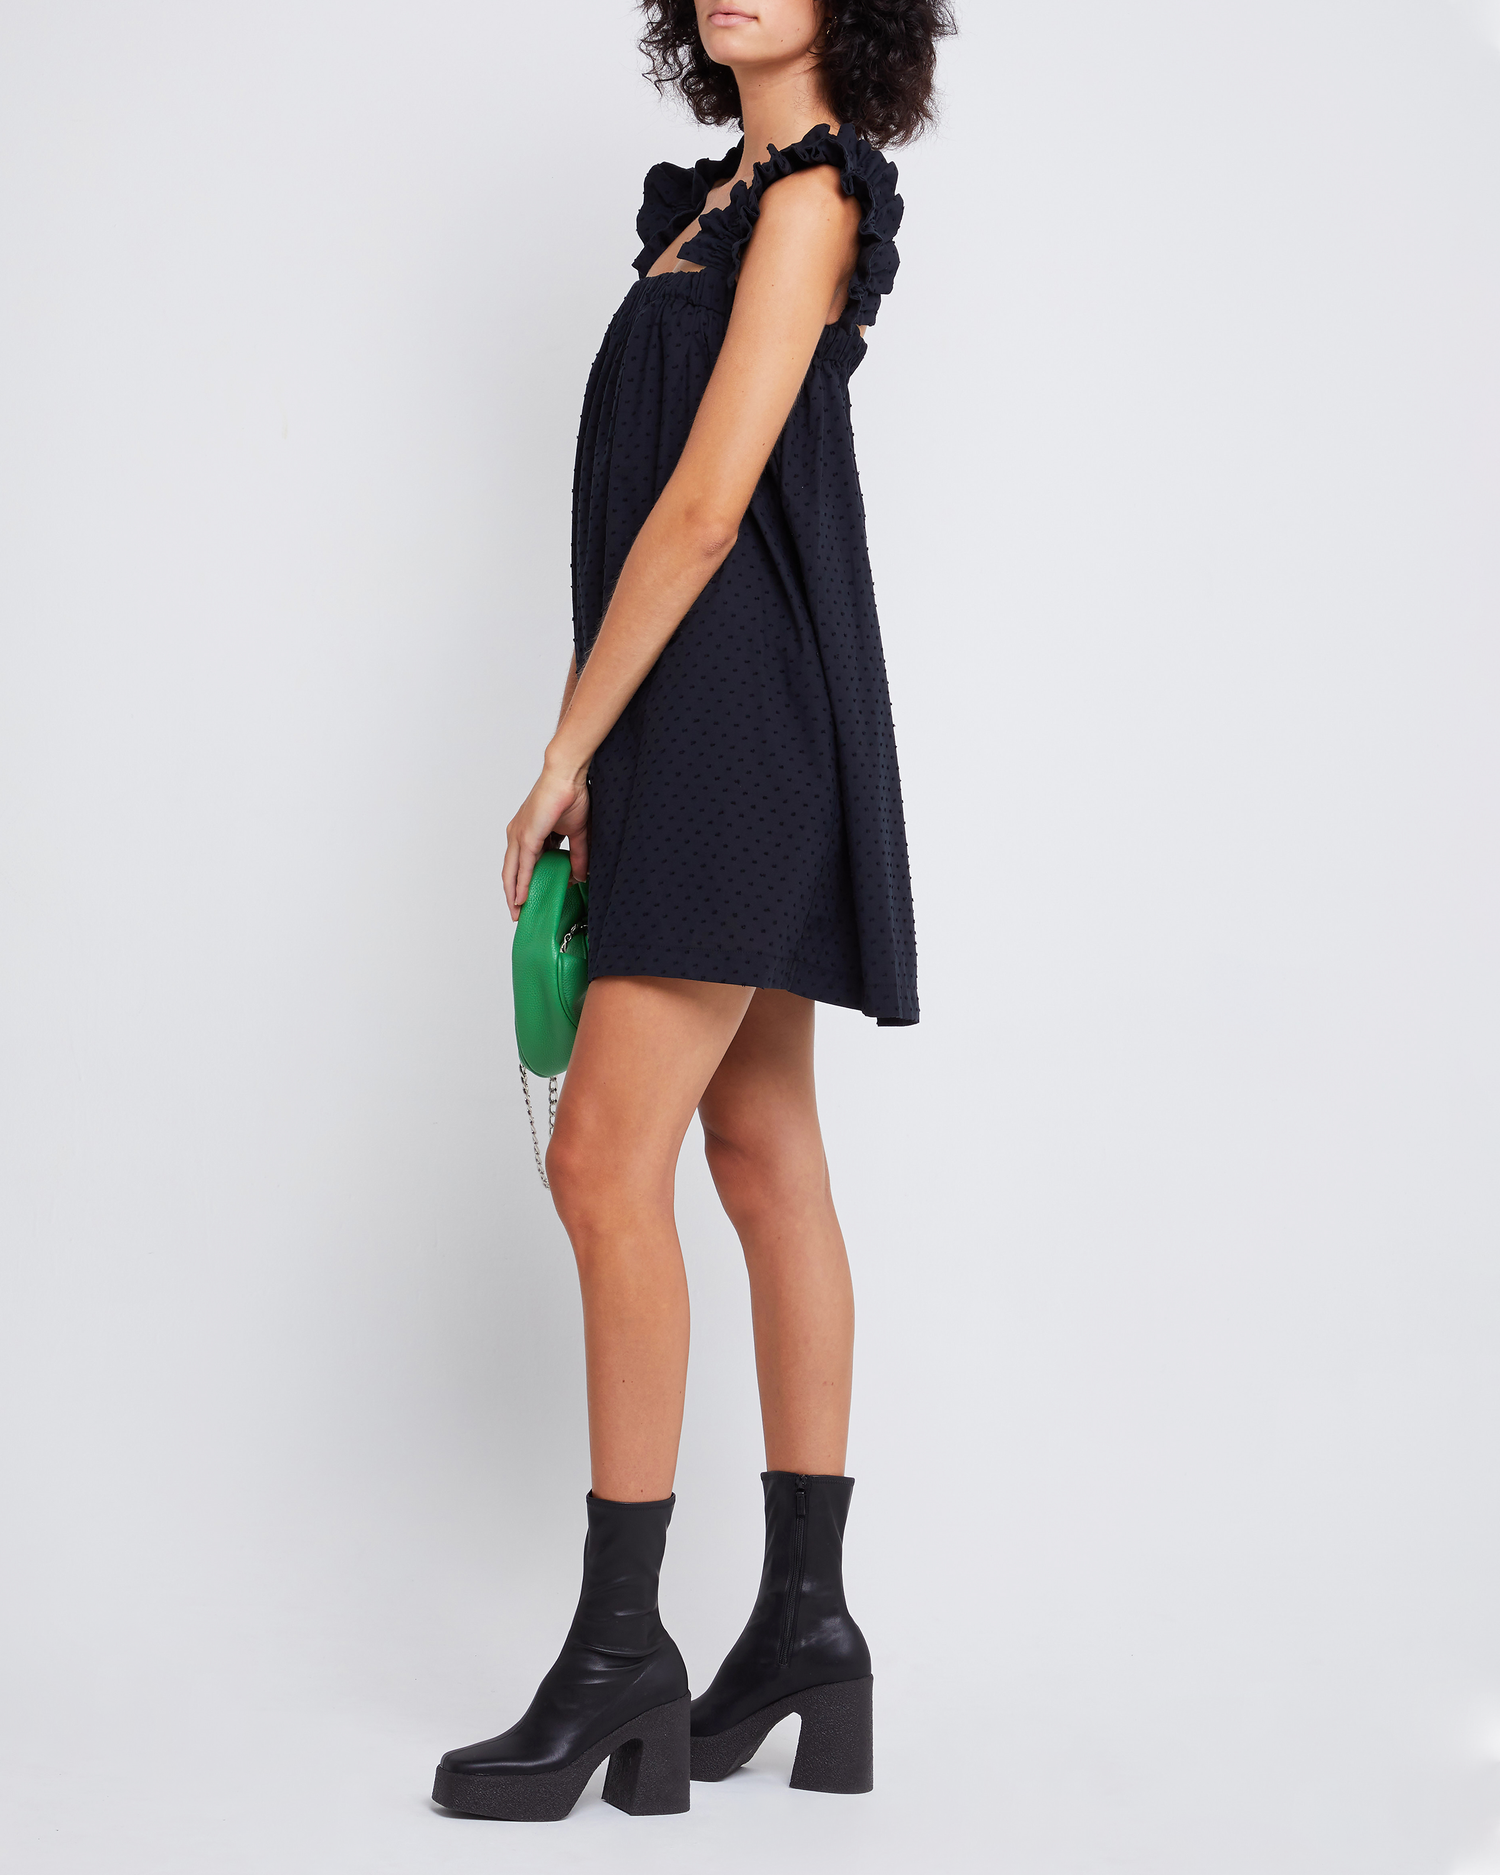 Third image of Nivia Dress, a black mini dress, ruffle sleeves, cap sleeves, flowy, relaxed